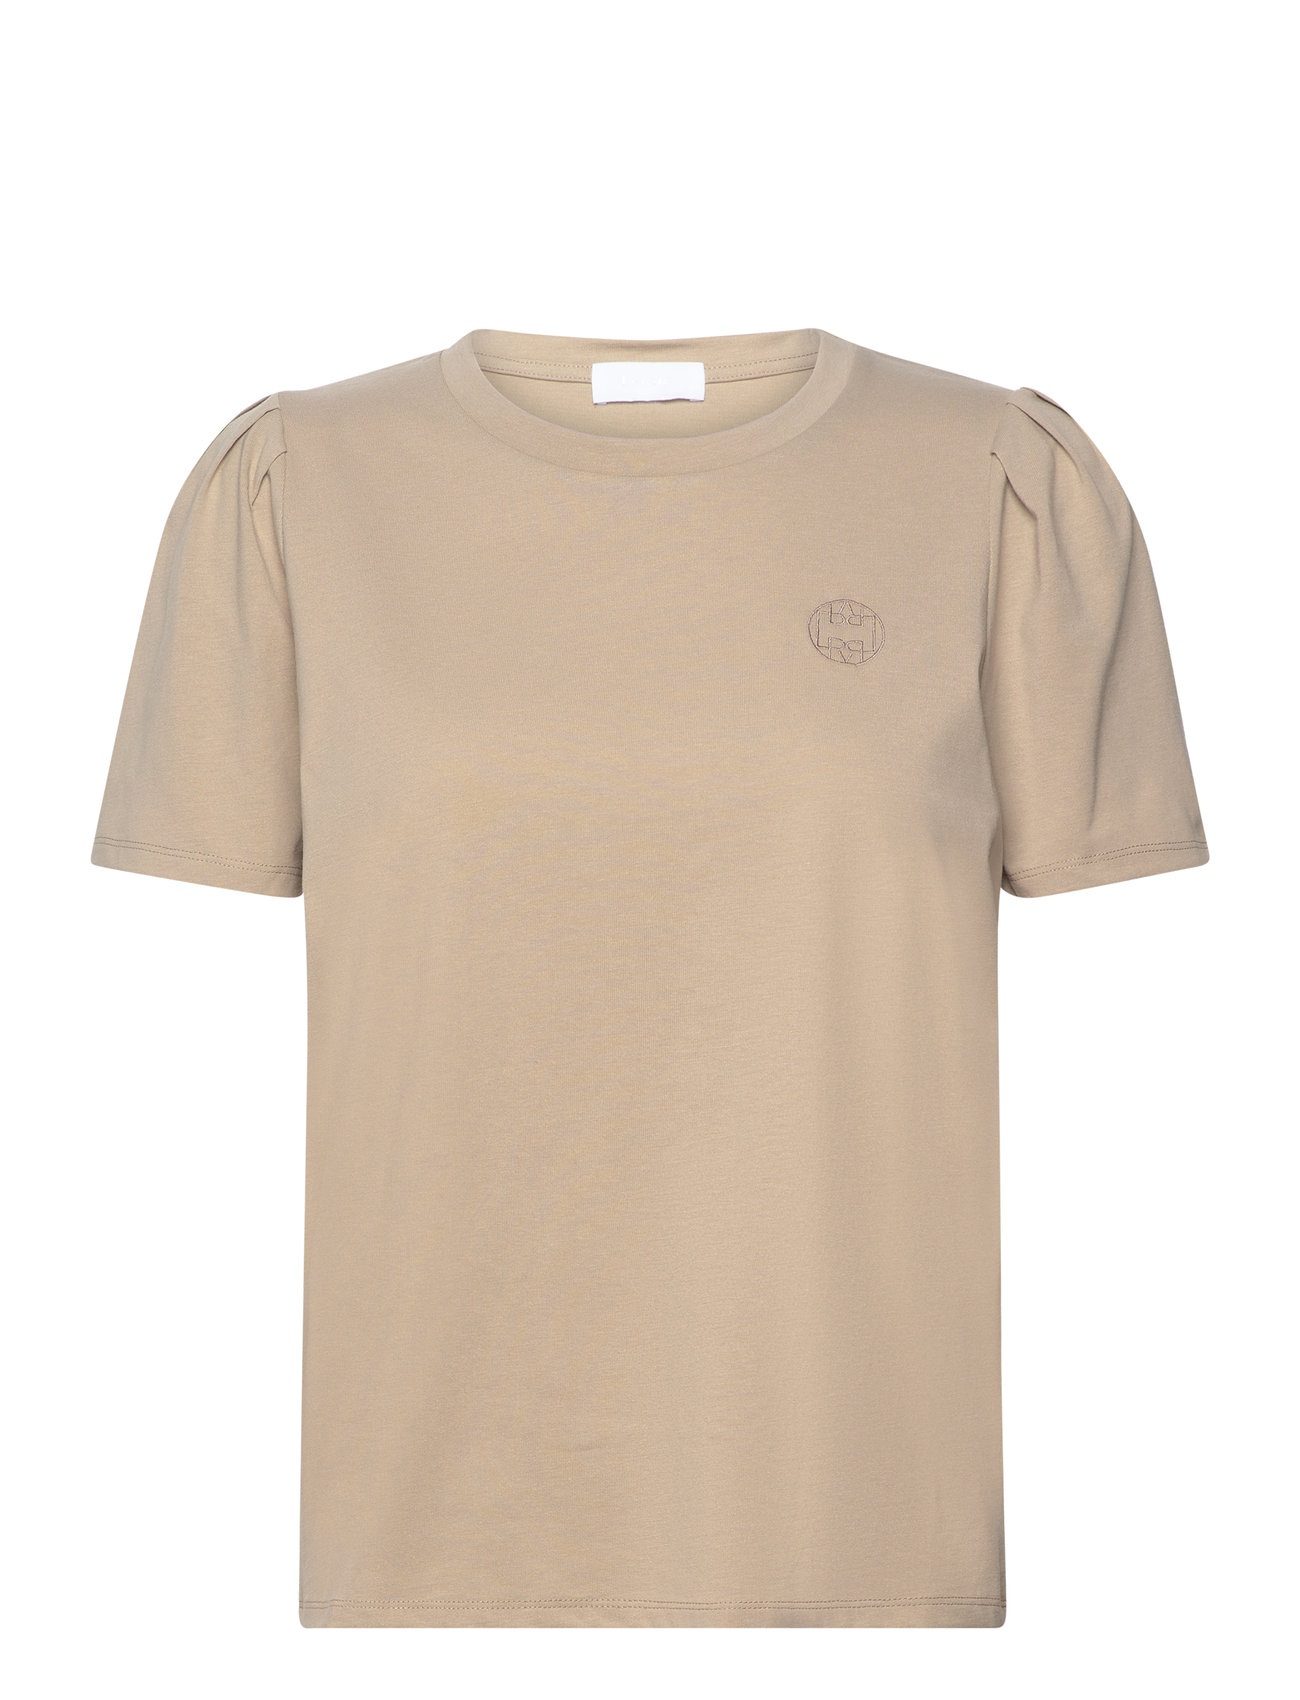 Lr-Isol Tops T-shirts & Tops Short-sleeved Beige Levete Room